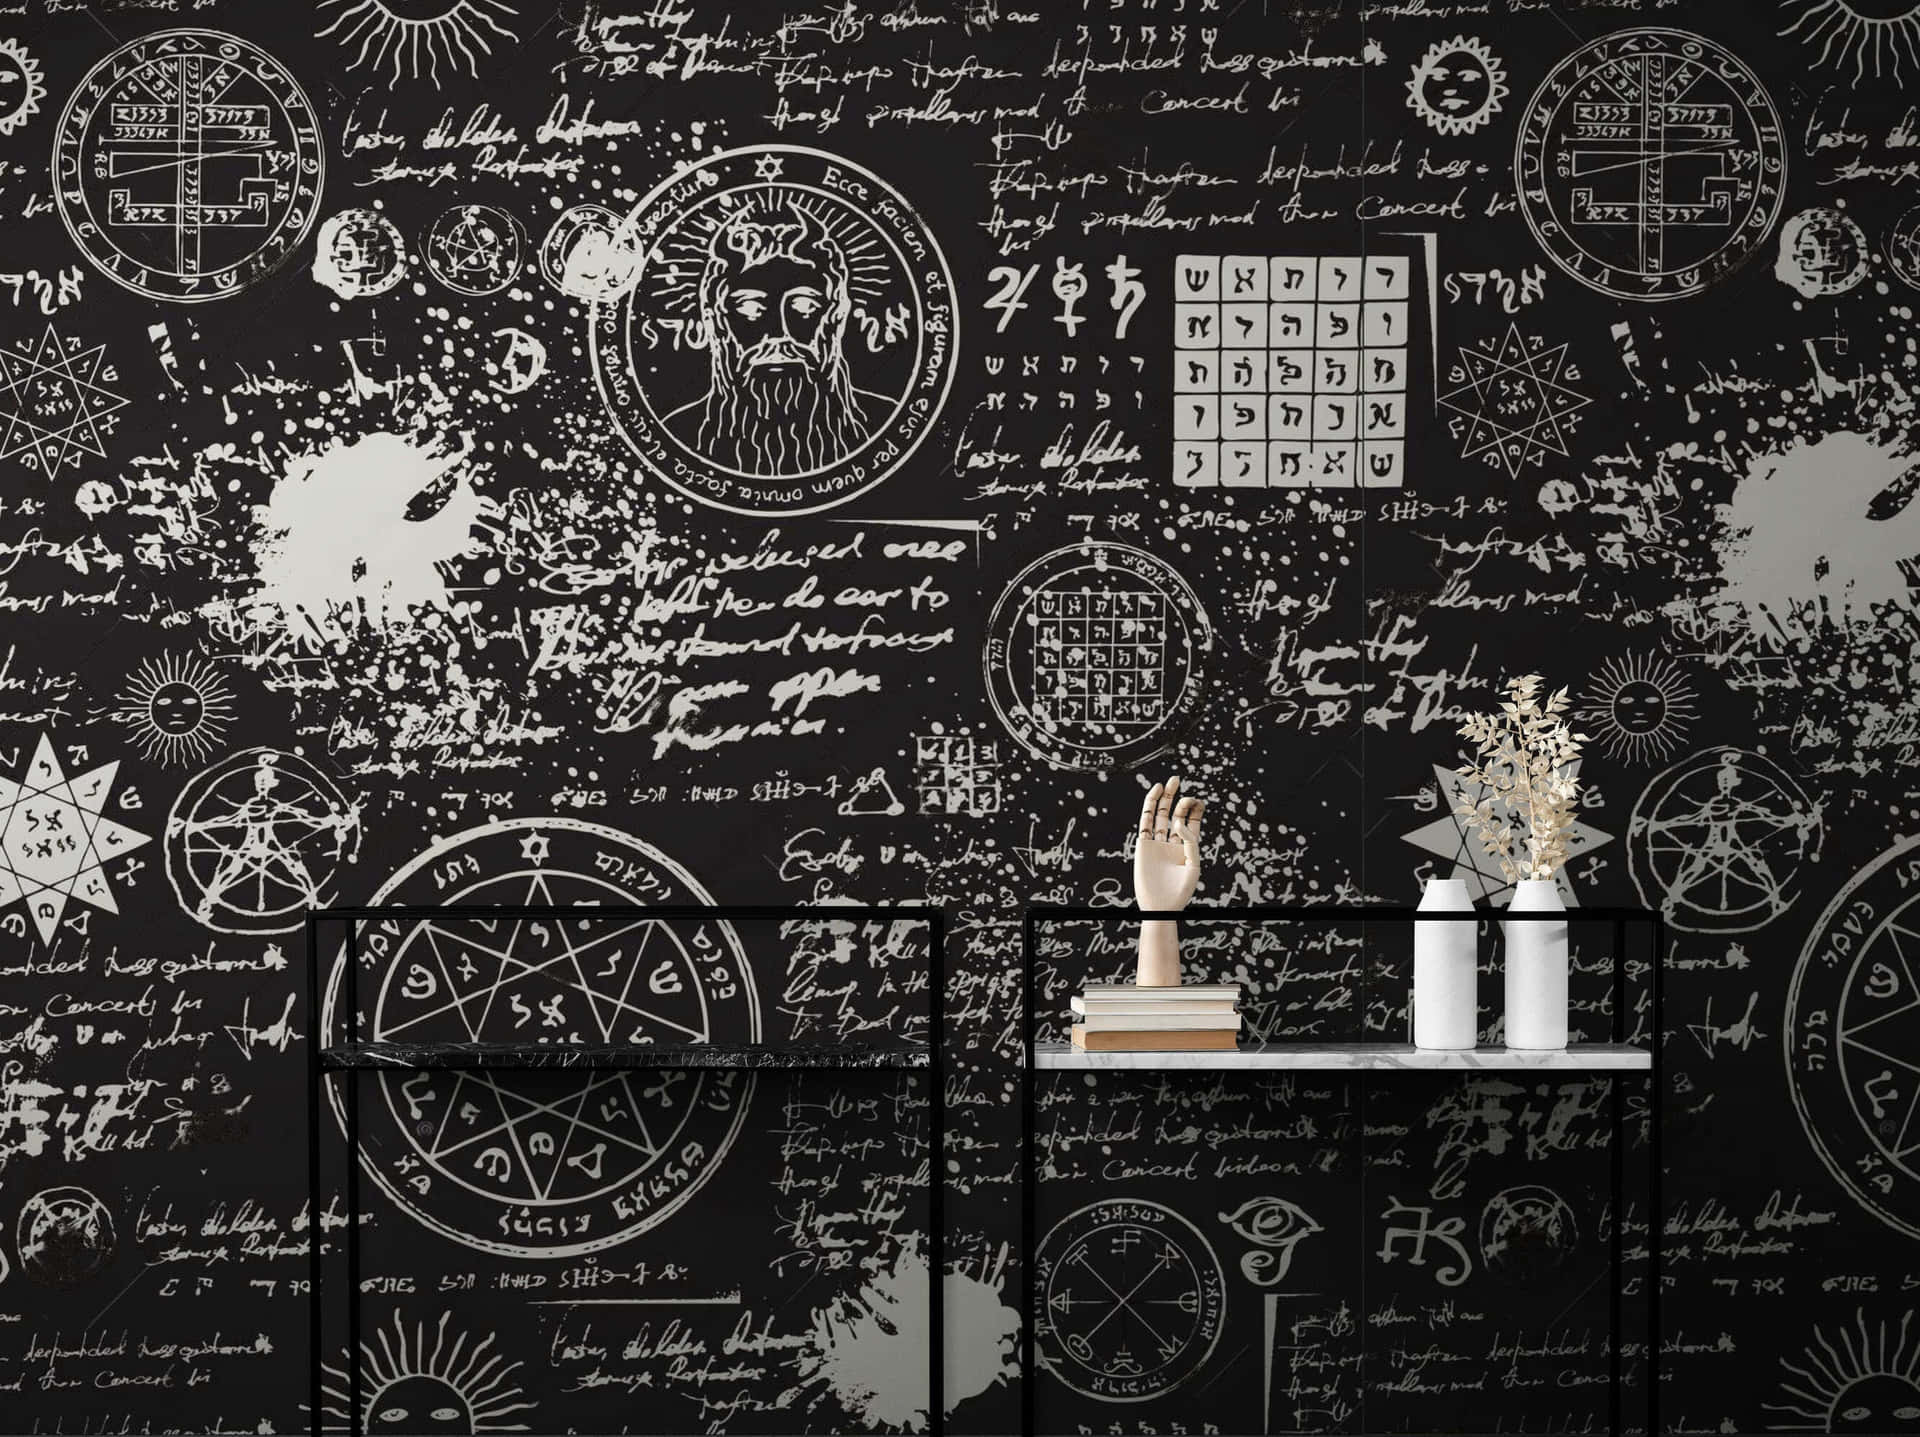 Caption: Enigmatic Occult Symbols and Art Wallpaper